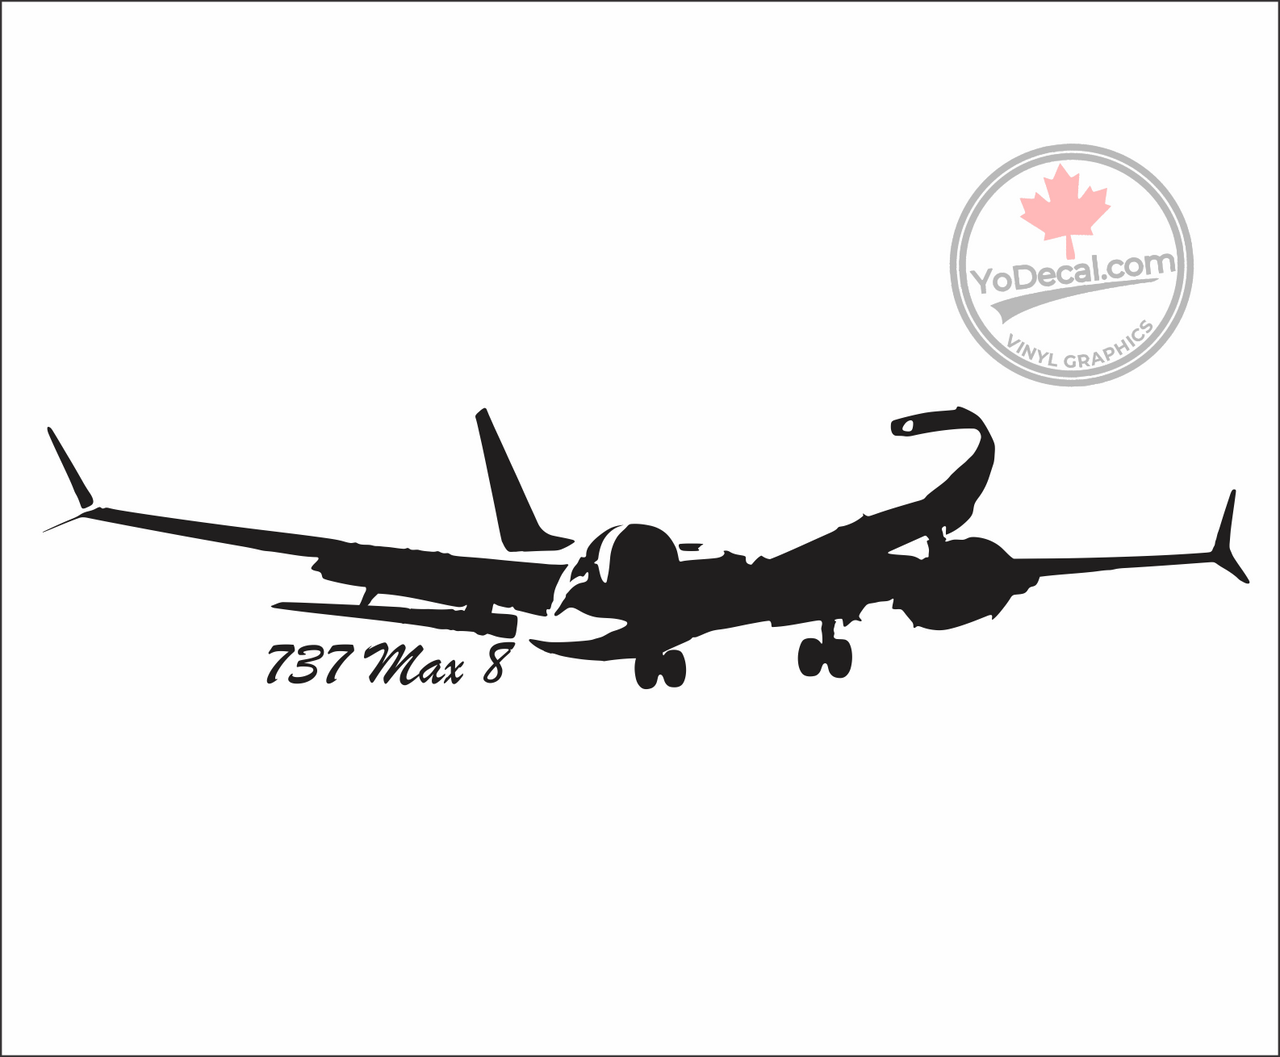 737 Max-8 Vinyl Decal - Black 